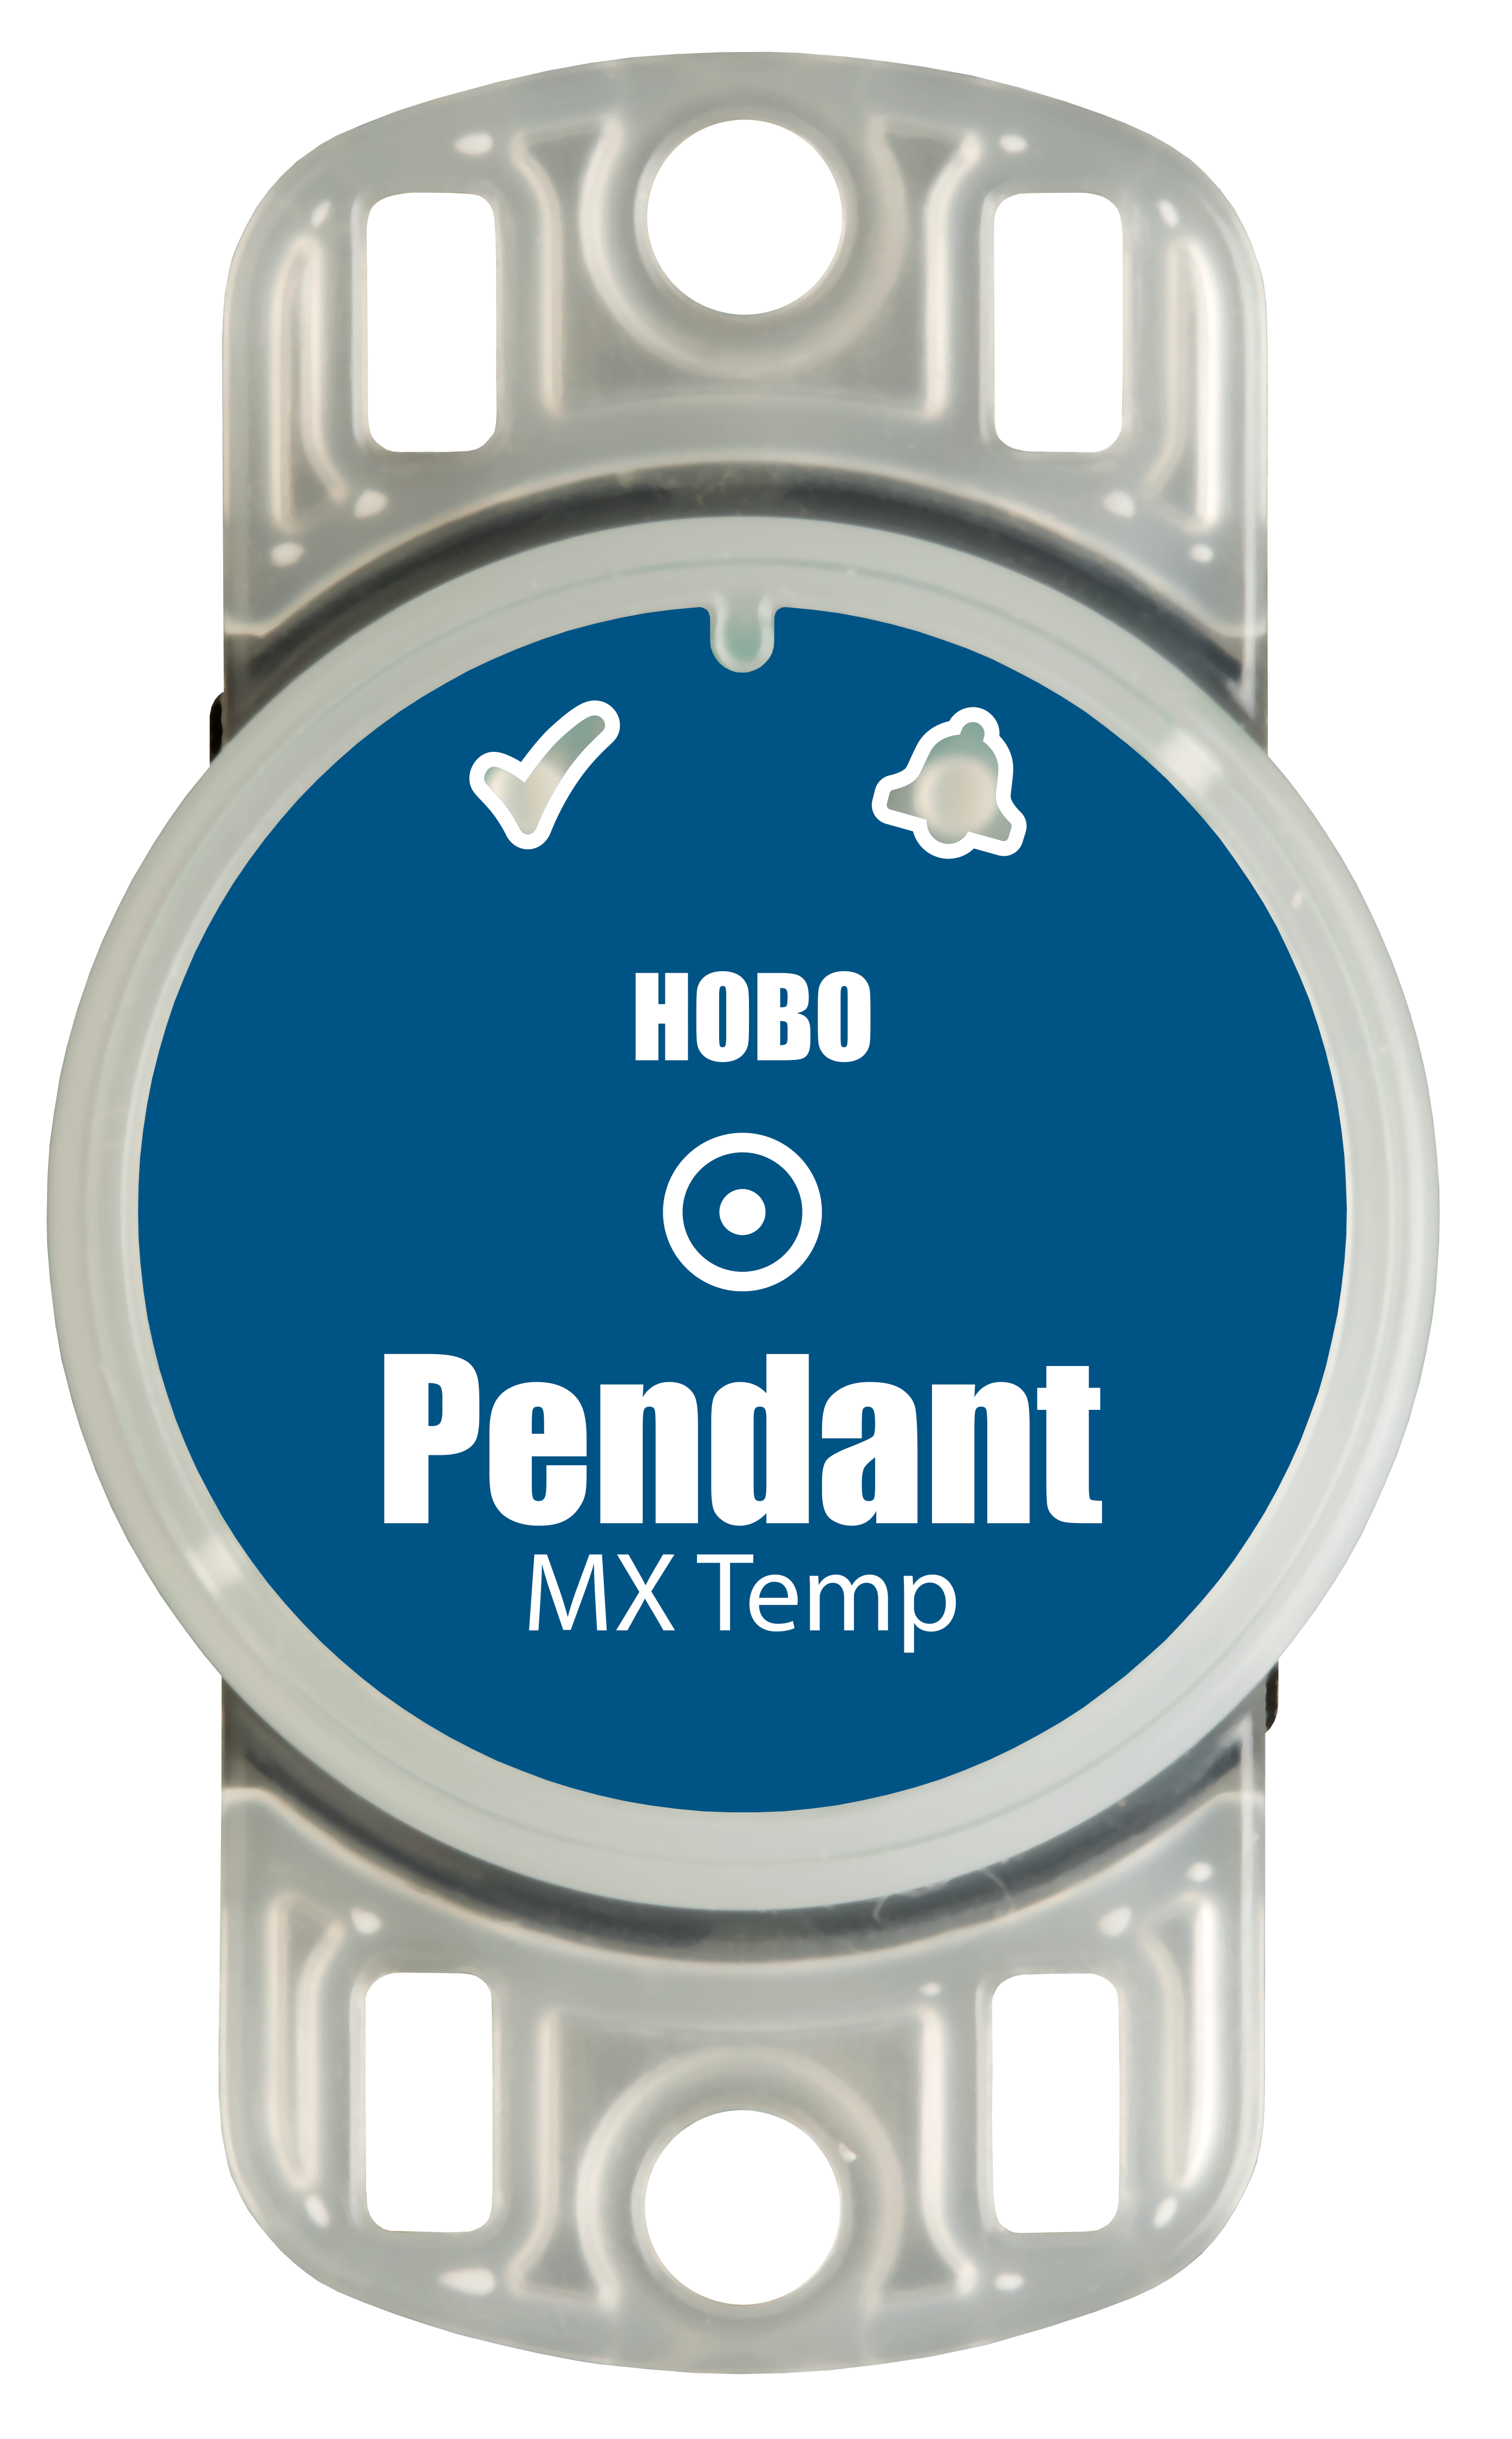 HOBO MX2201 Pendant® MX Water Temperature Data Logger